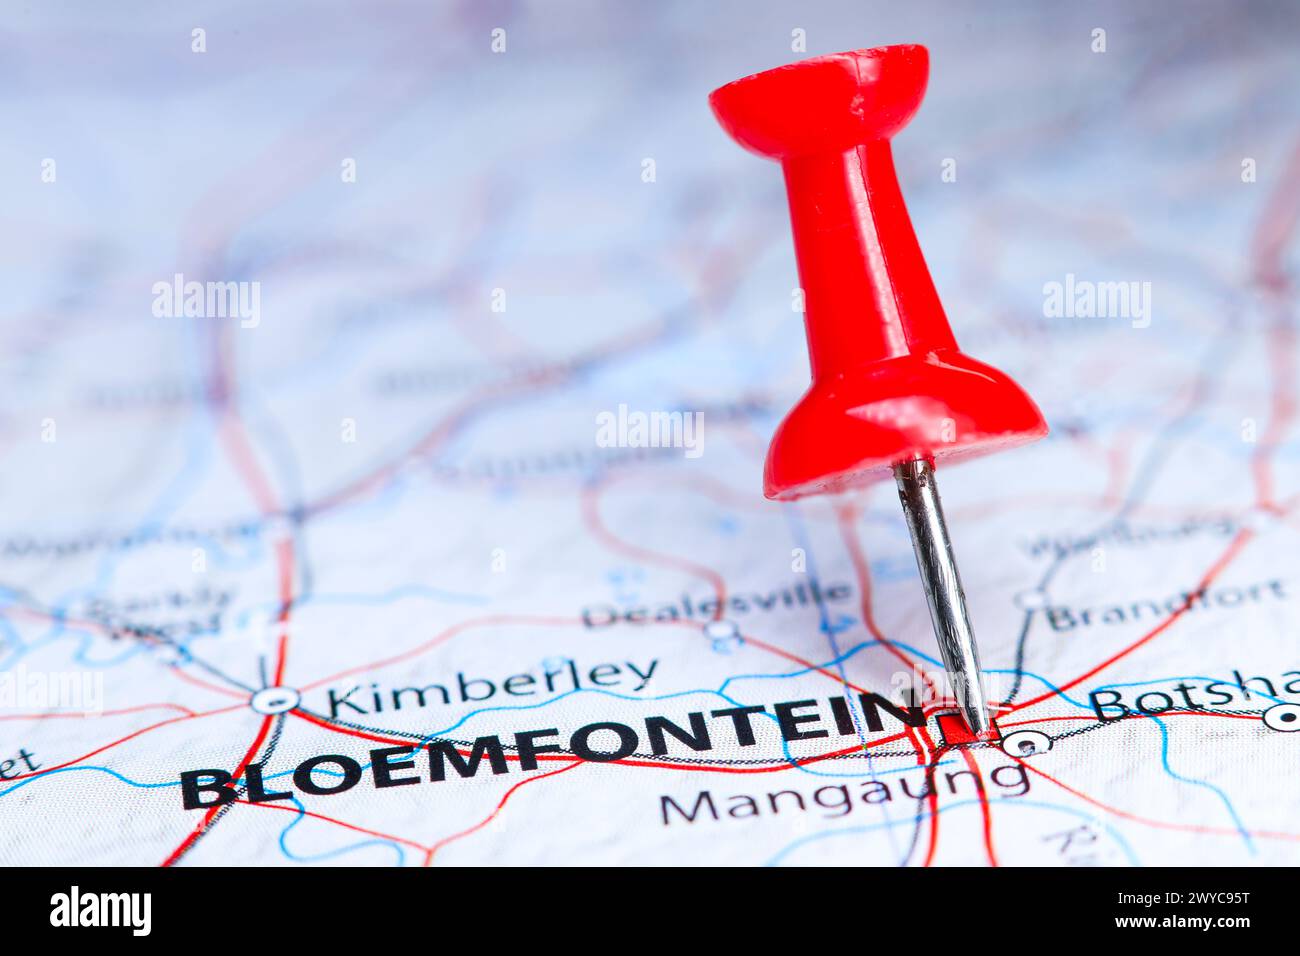 Bloemfontein, Sud Africa spilla sulla mappa Foto Stock